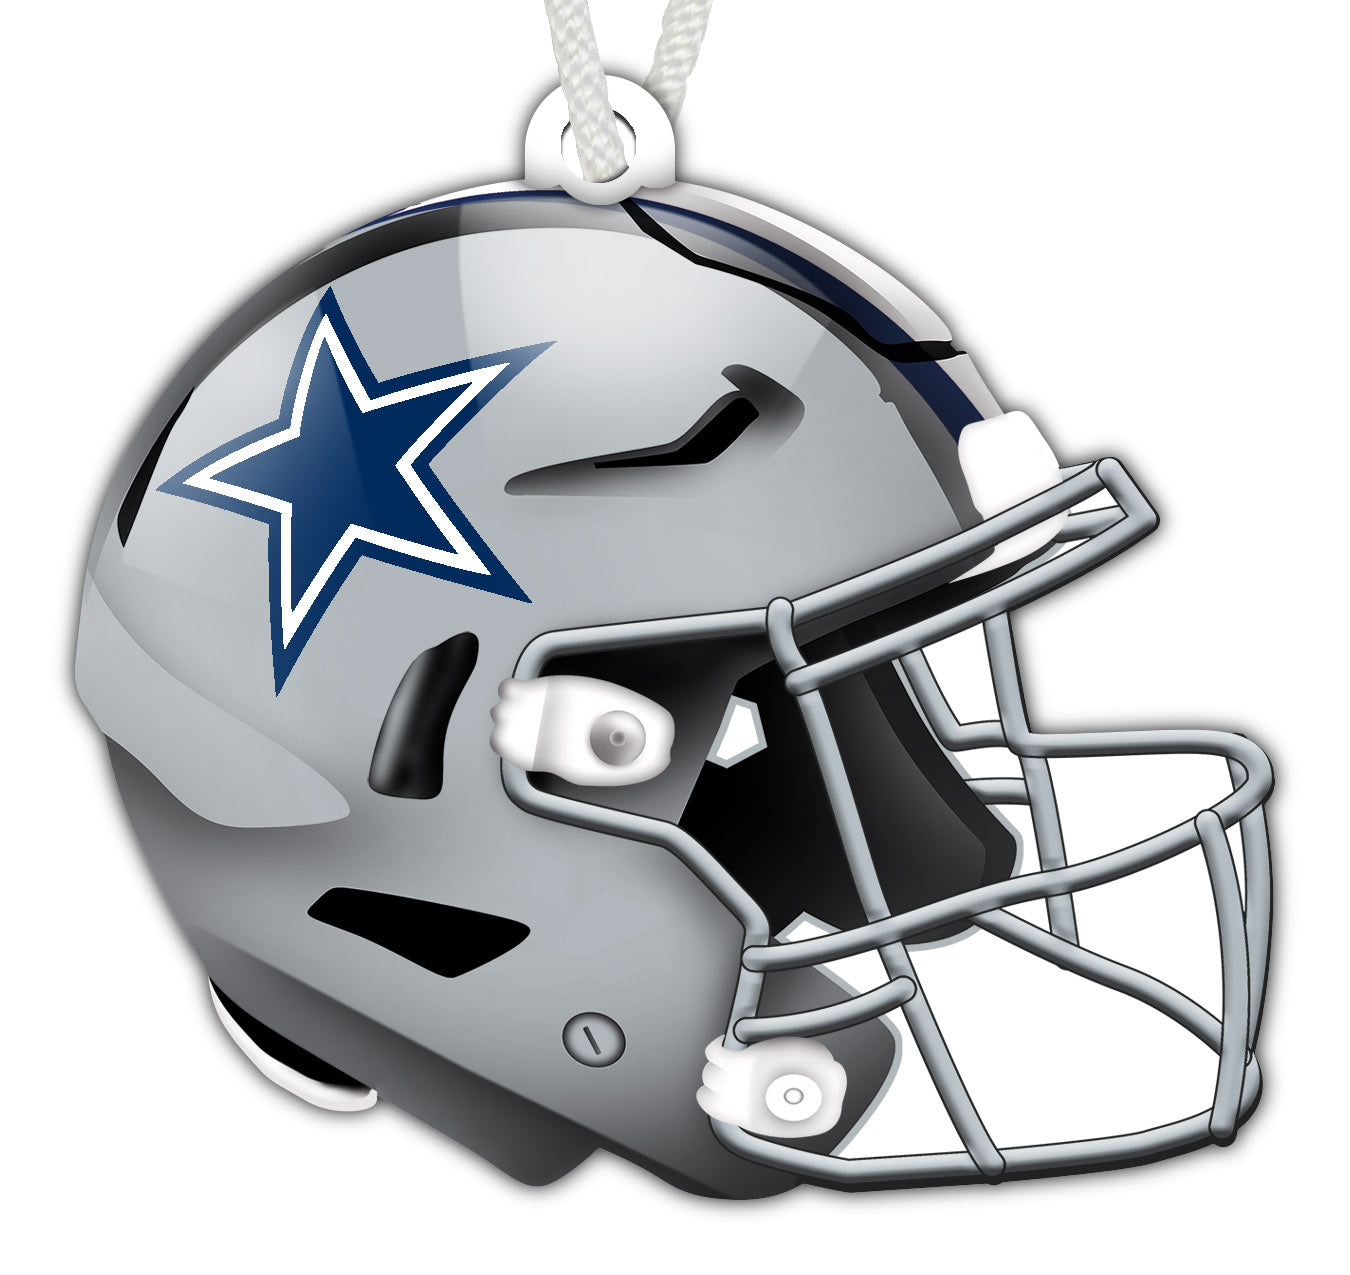 Dallas Cowboys Wooden Helmet Ornament - Dynasty Sports